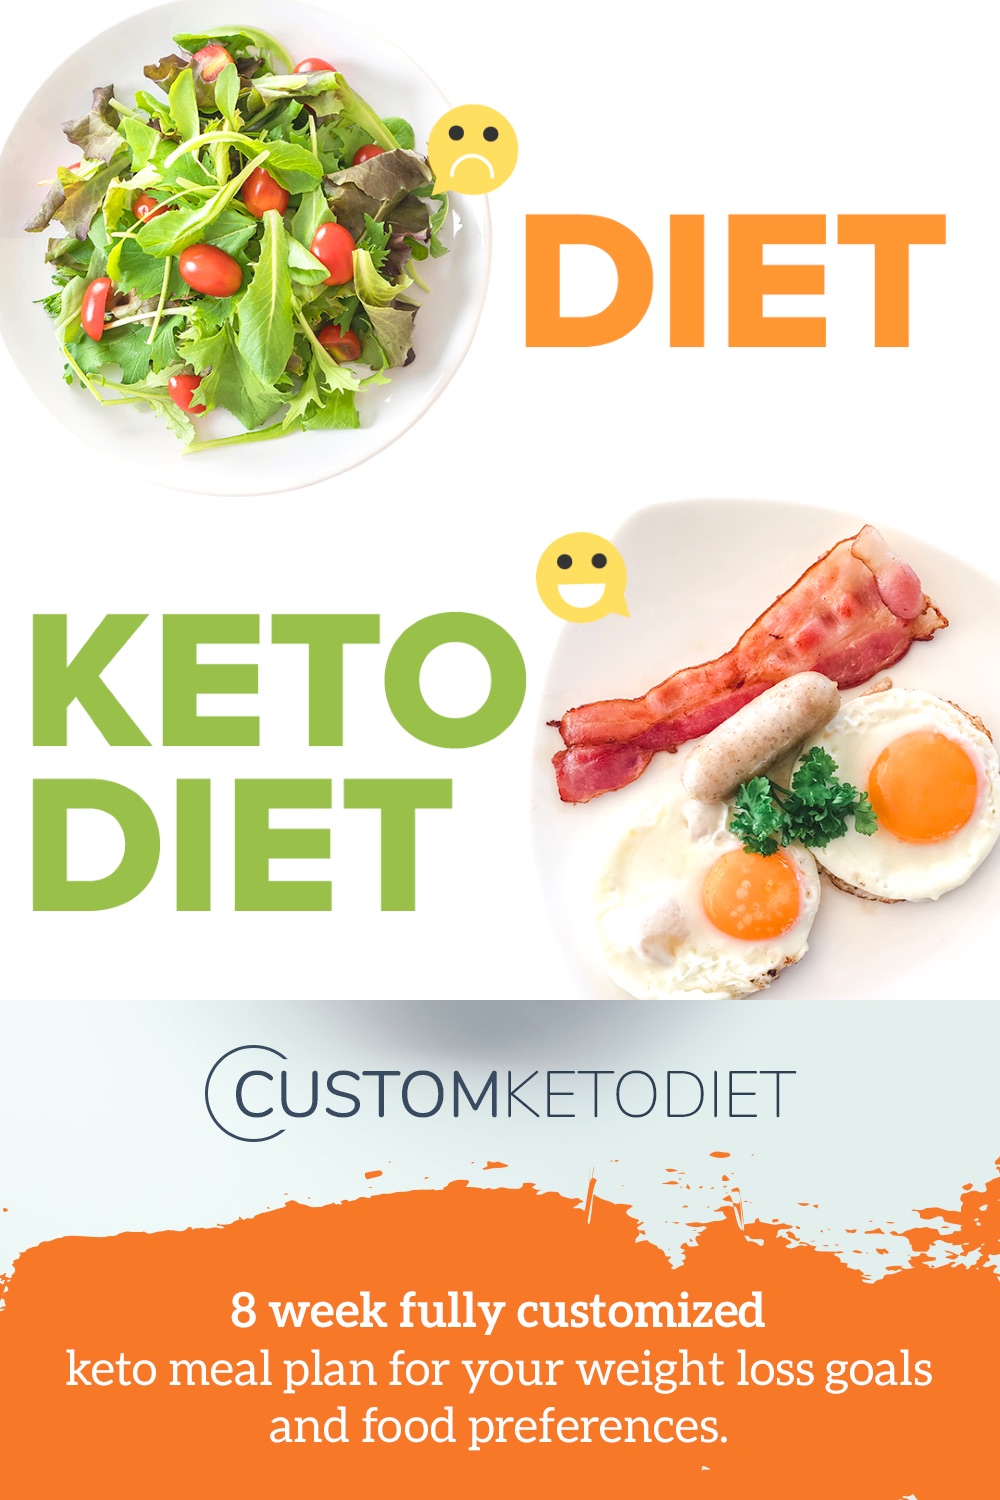 is custom keto diet worth it